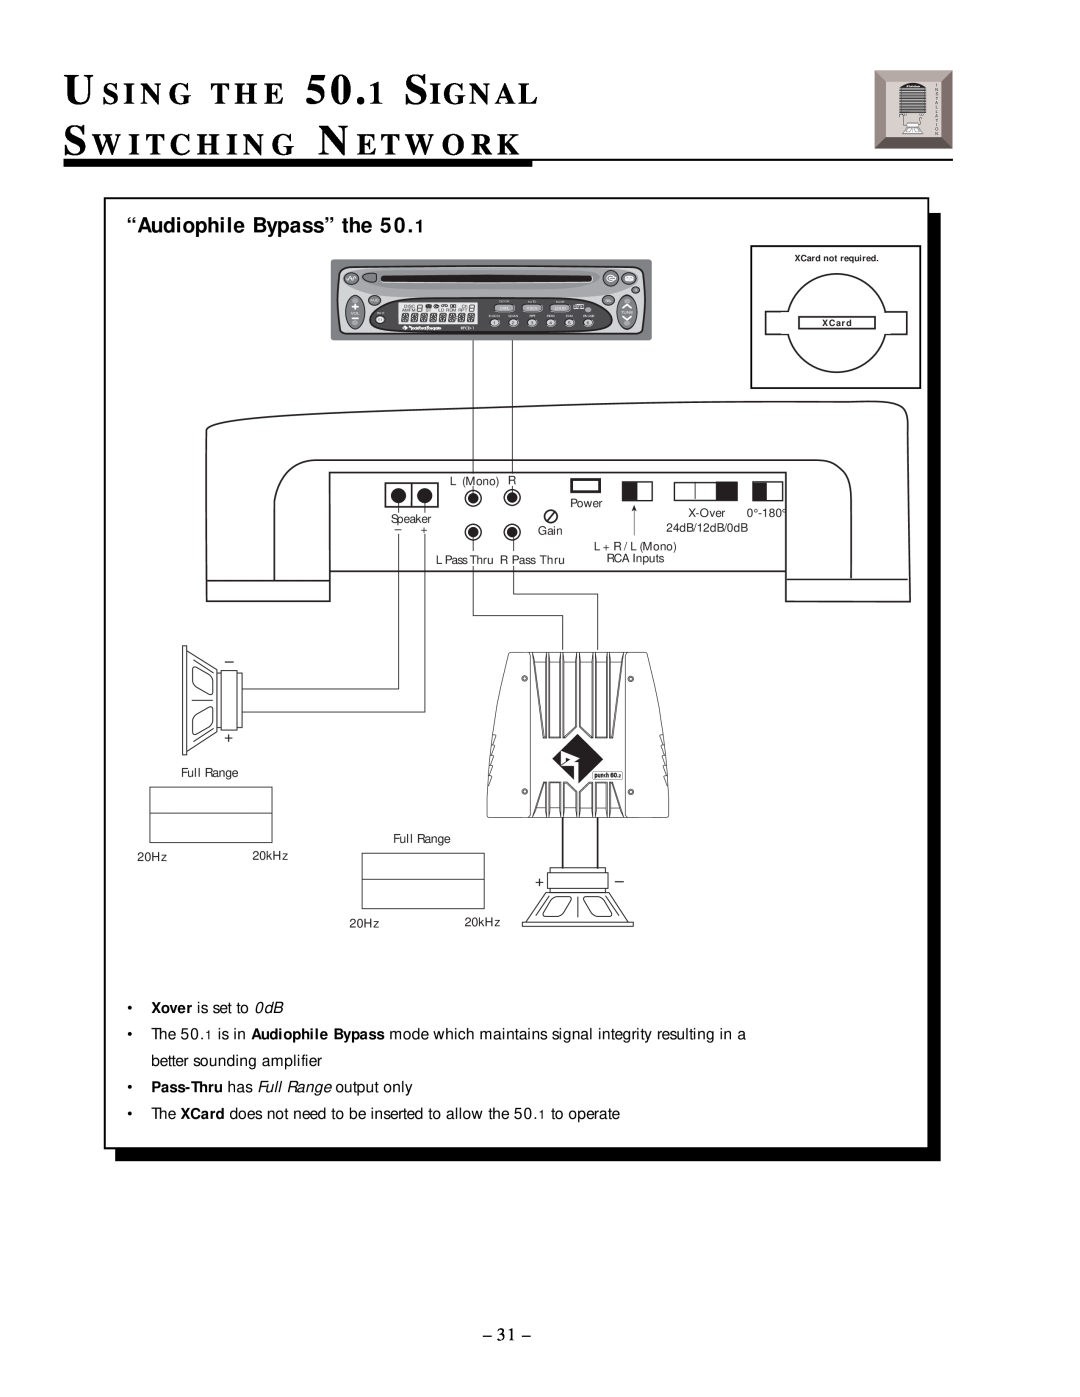 Rockford Fosgate 50.2 manual U S I N G T H E 50.1 SIGNAL, S W I T C H I N G N E T W O R K, “Audiophile Bypass” the 